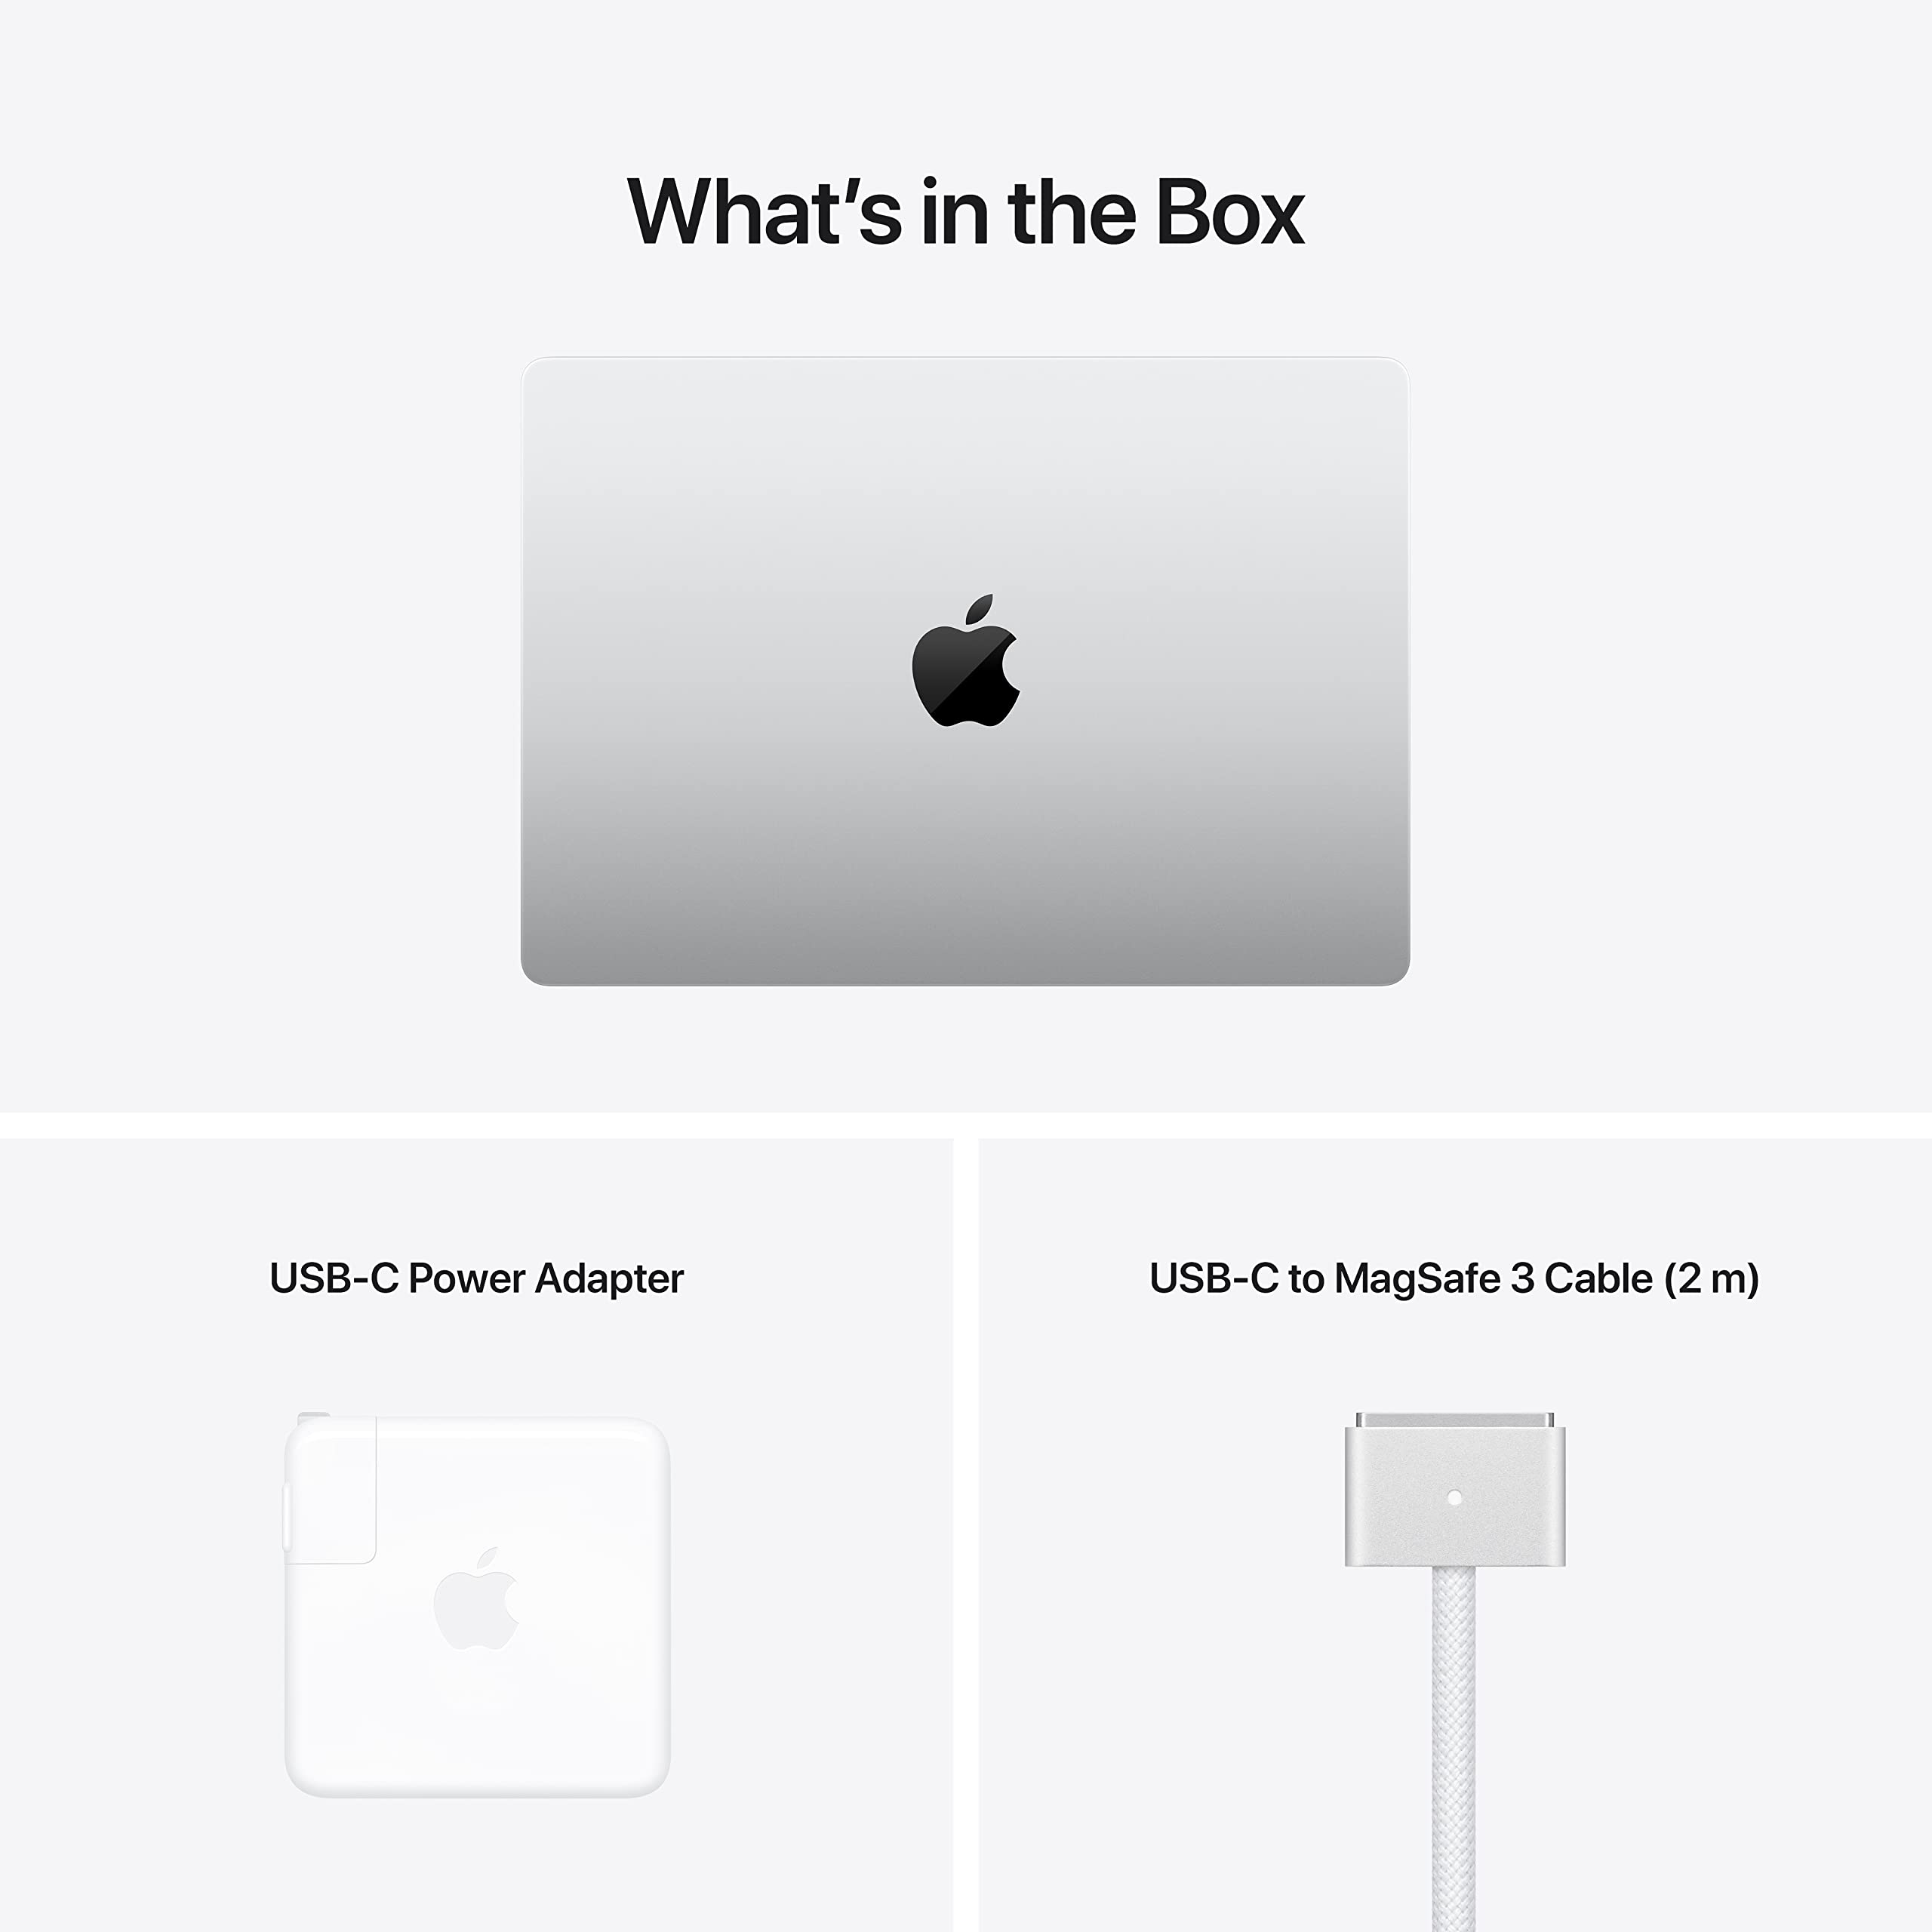 Apple 2021 MacBook Pro (14-inch, M1 Pro chip with 8‑core CPU and 14‑core GPU, 16GB RAM, 512GB SSD) - Silver AppleCare+ for 14-inch MacBook Pro